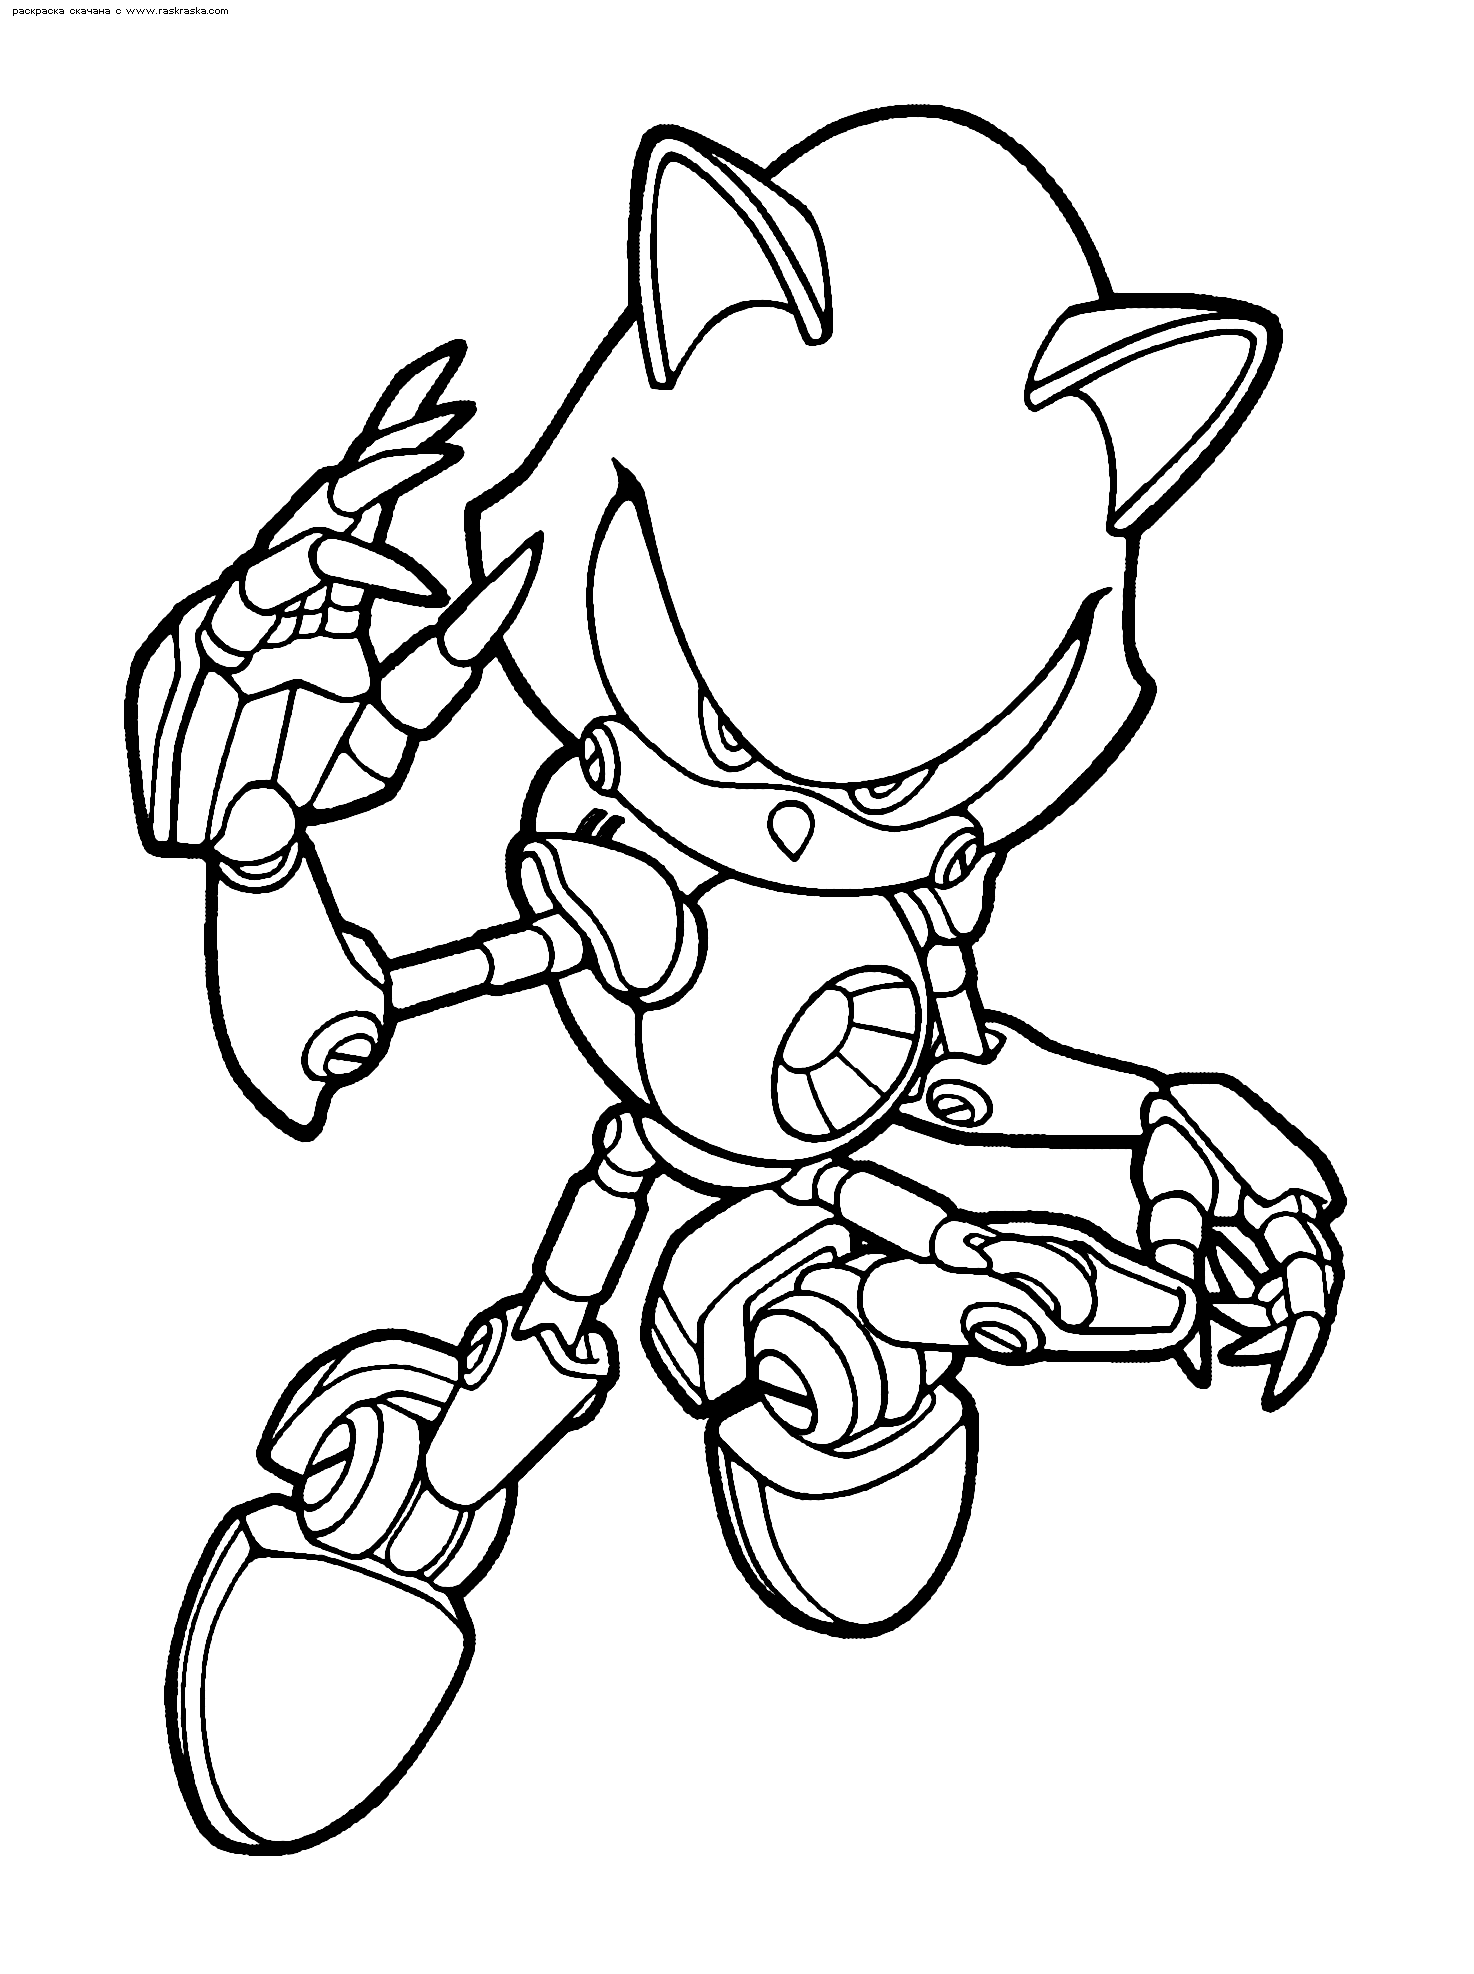 Desenho de Metal Sonic armadura para colorir - Tudodesenhos